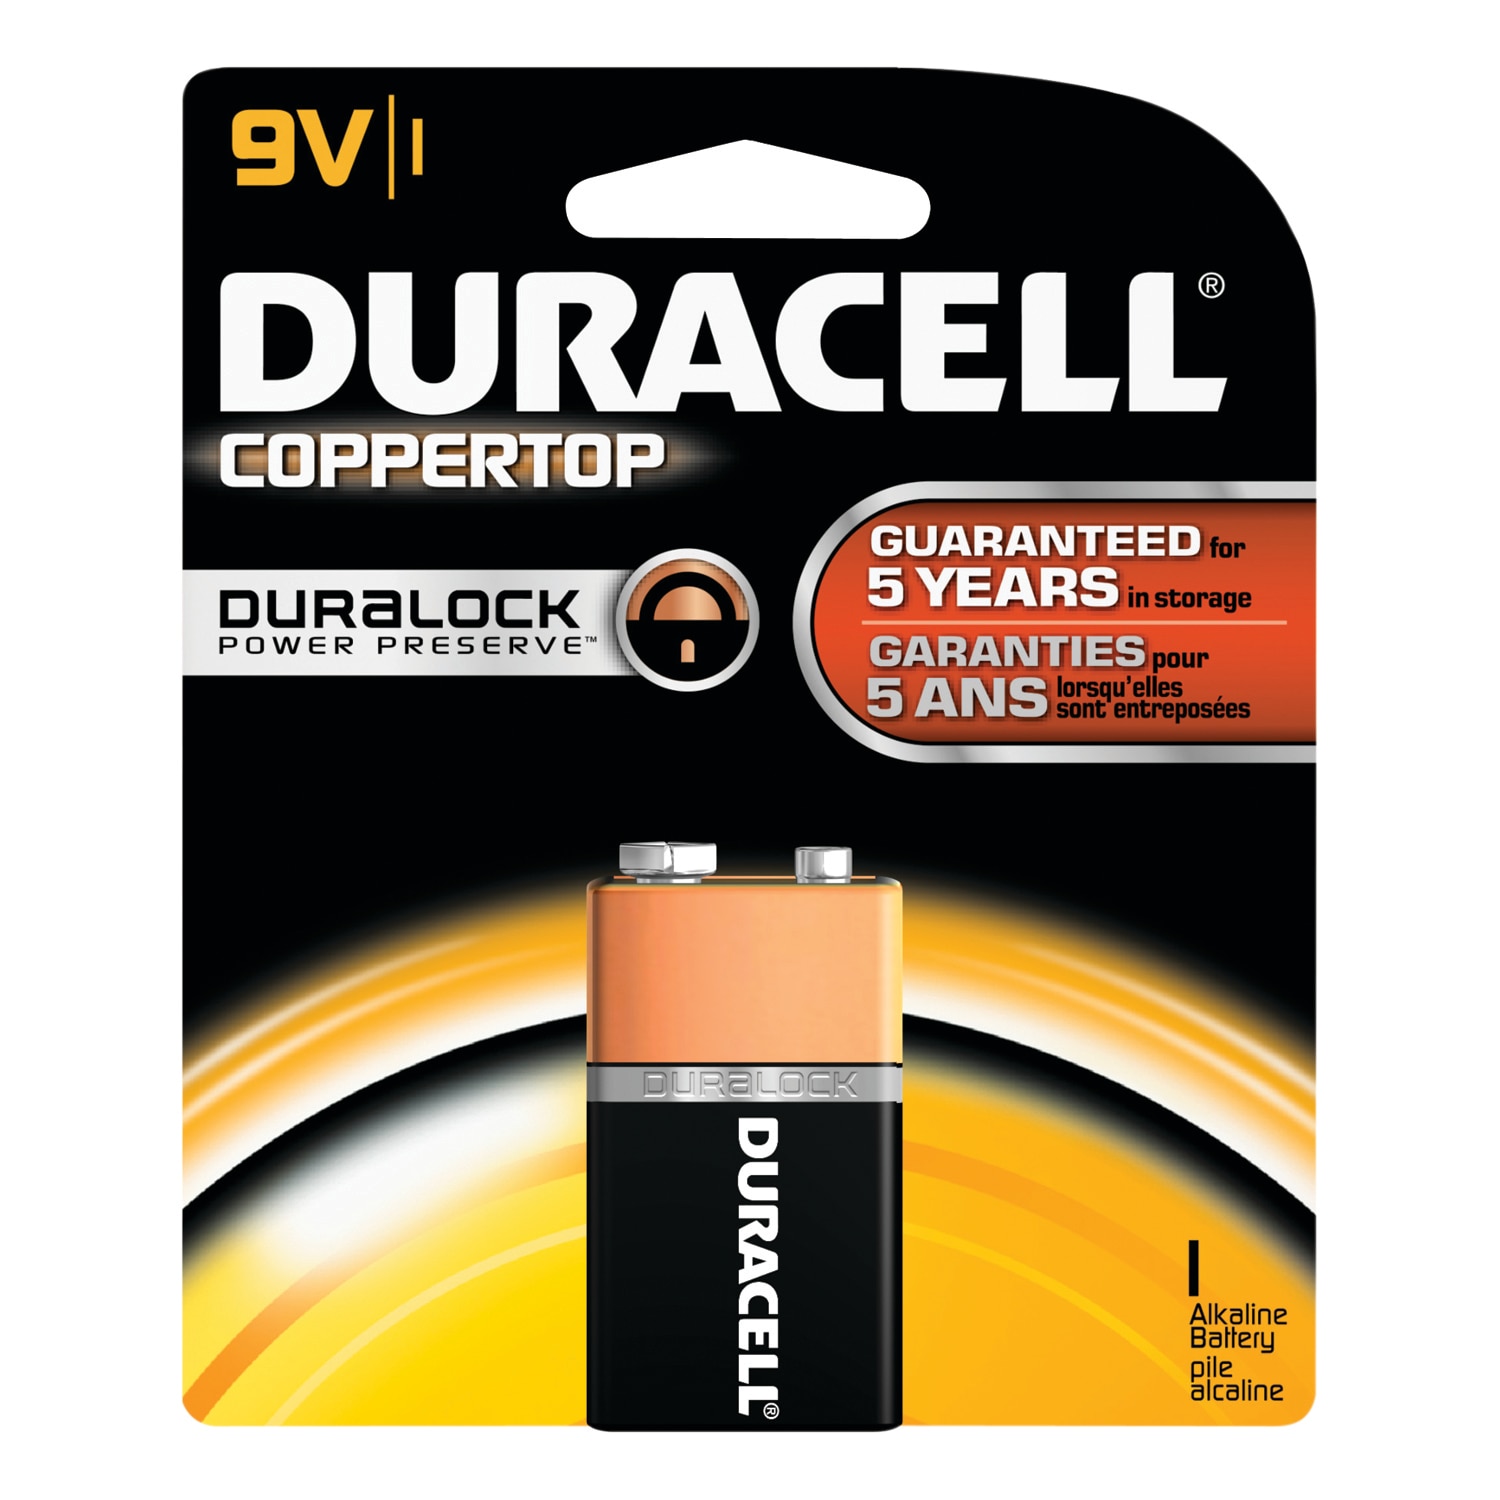 Duracell Coppertop Batteries - AAA, AA, C, D-MN